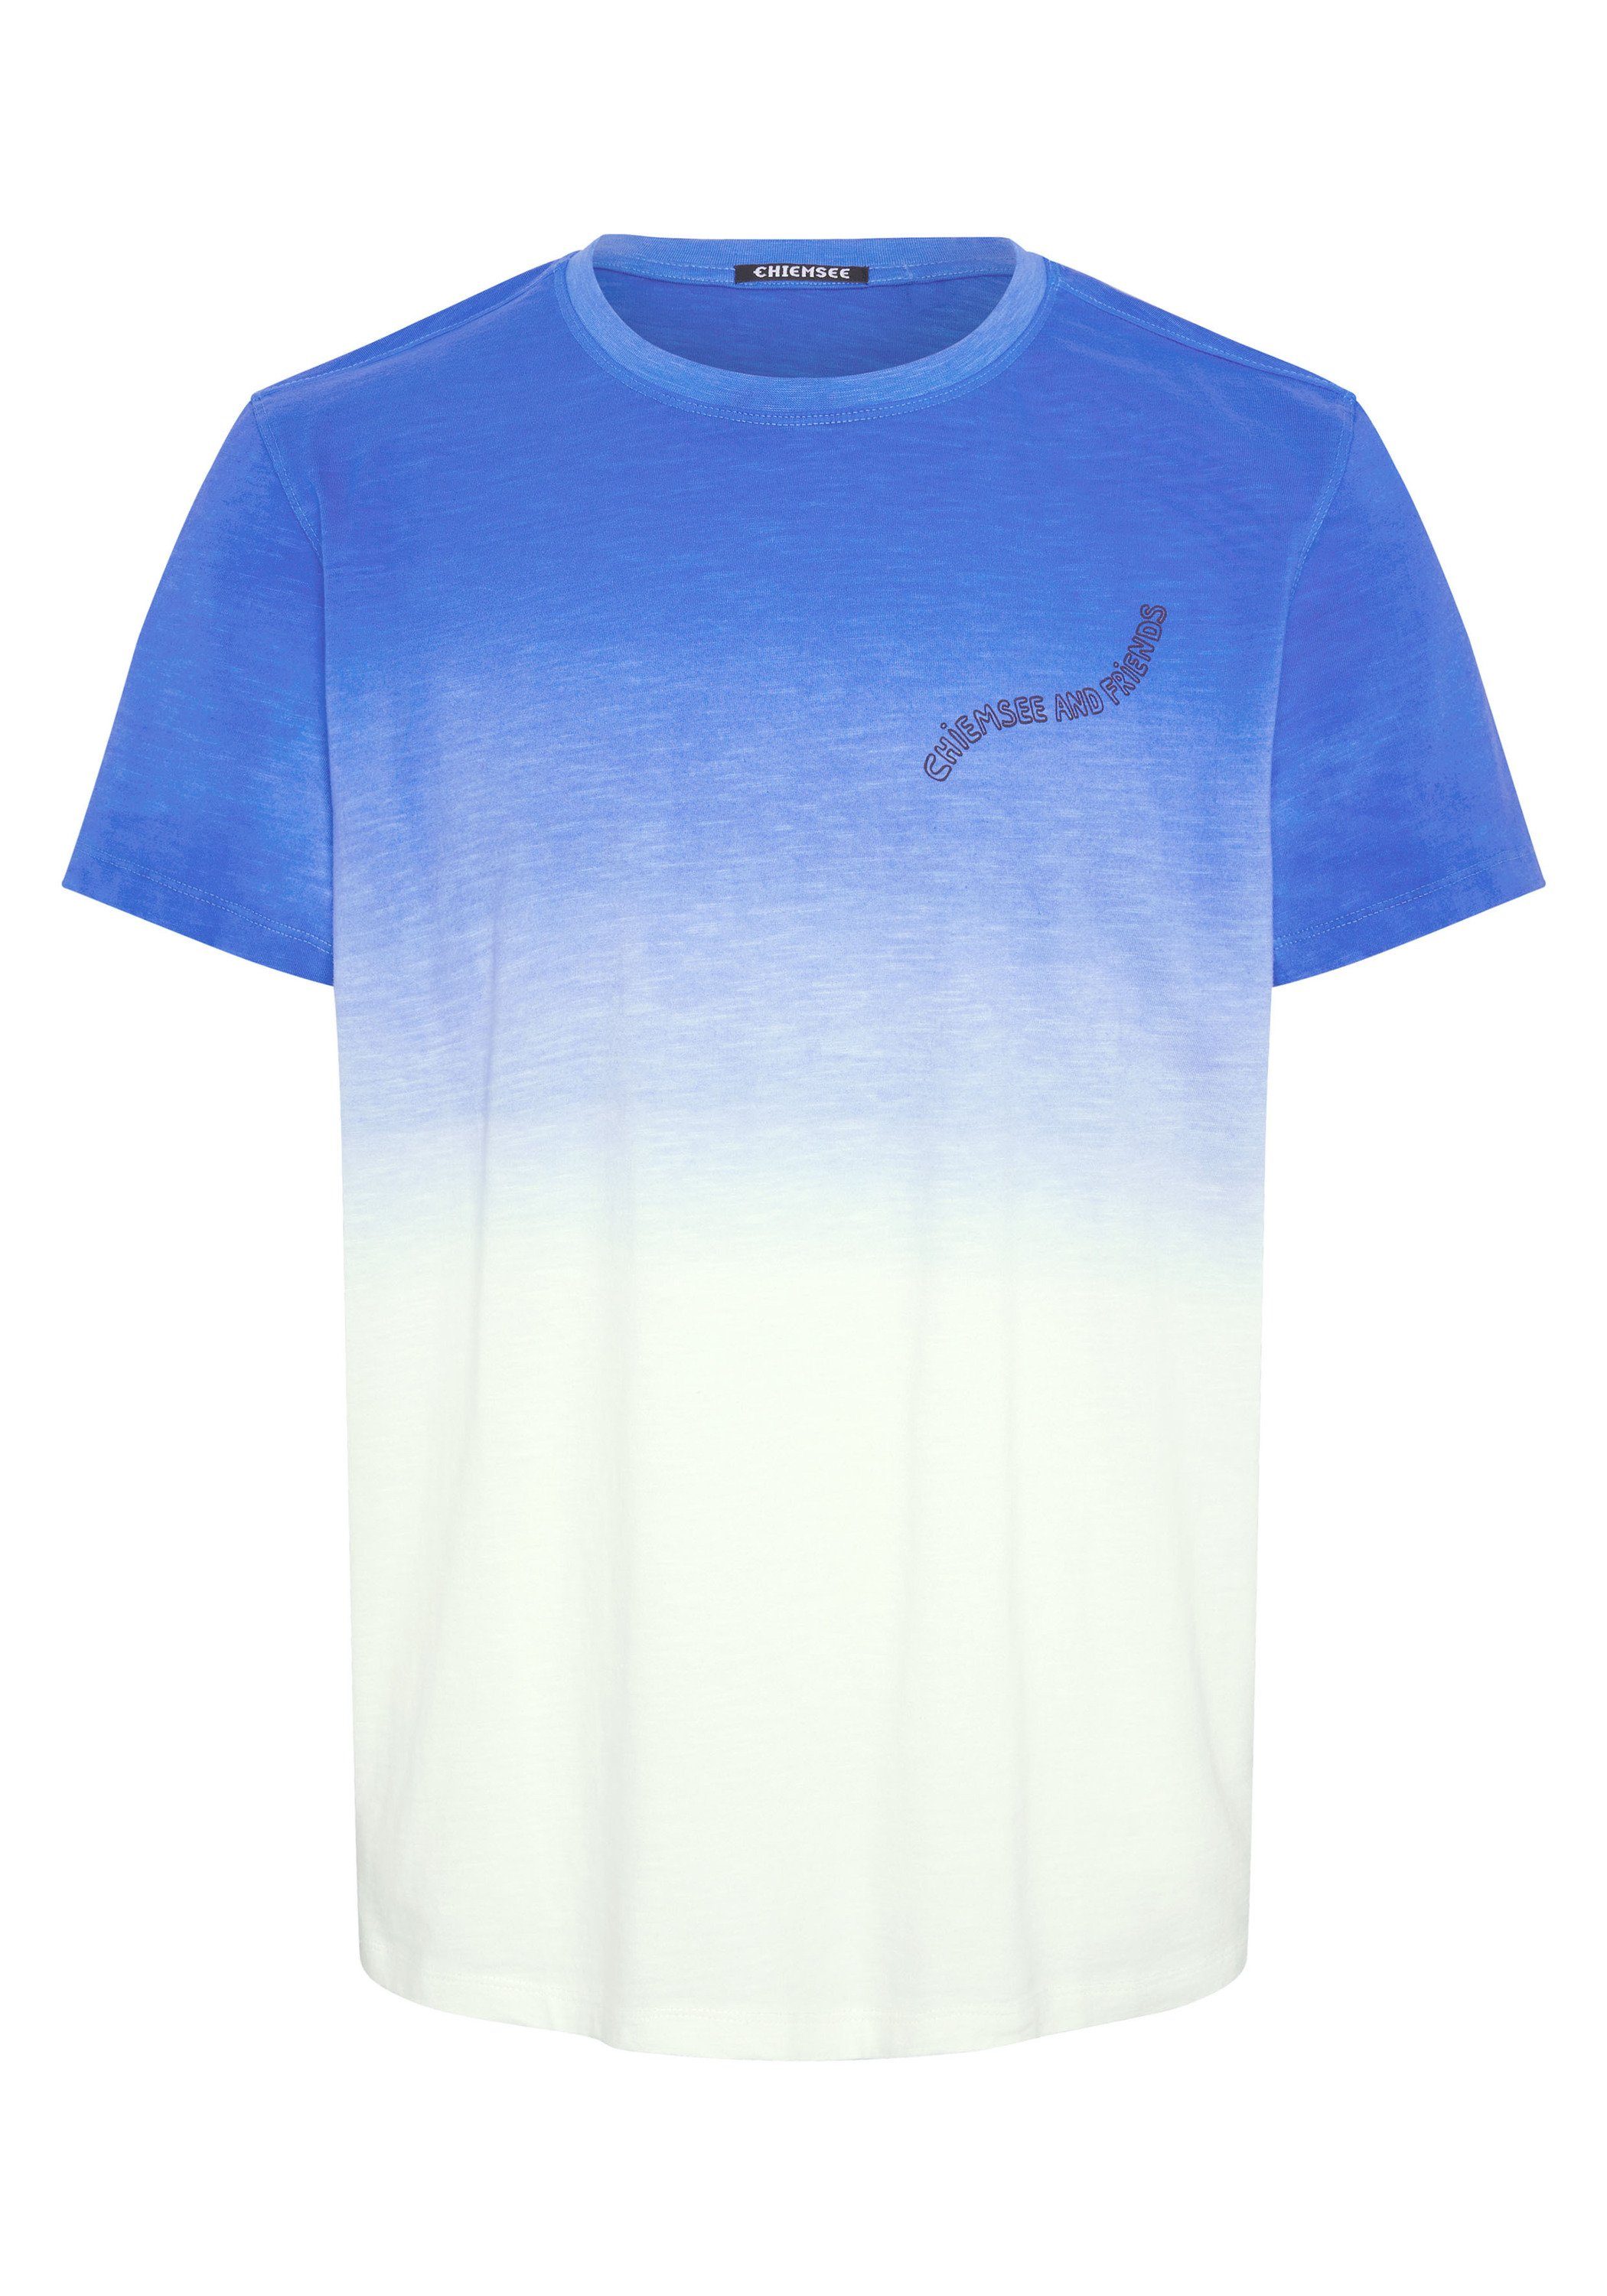 Chiemsee Print-Shirt T-Shirt im Farbverlauf mit Slub-Yarn-Textur 1 4548 Medium Blue/Dark Blue